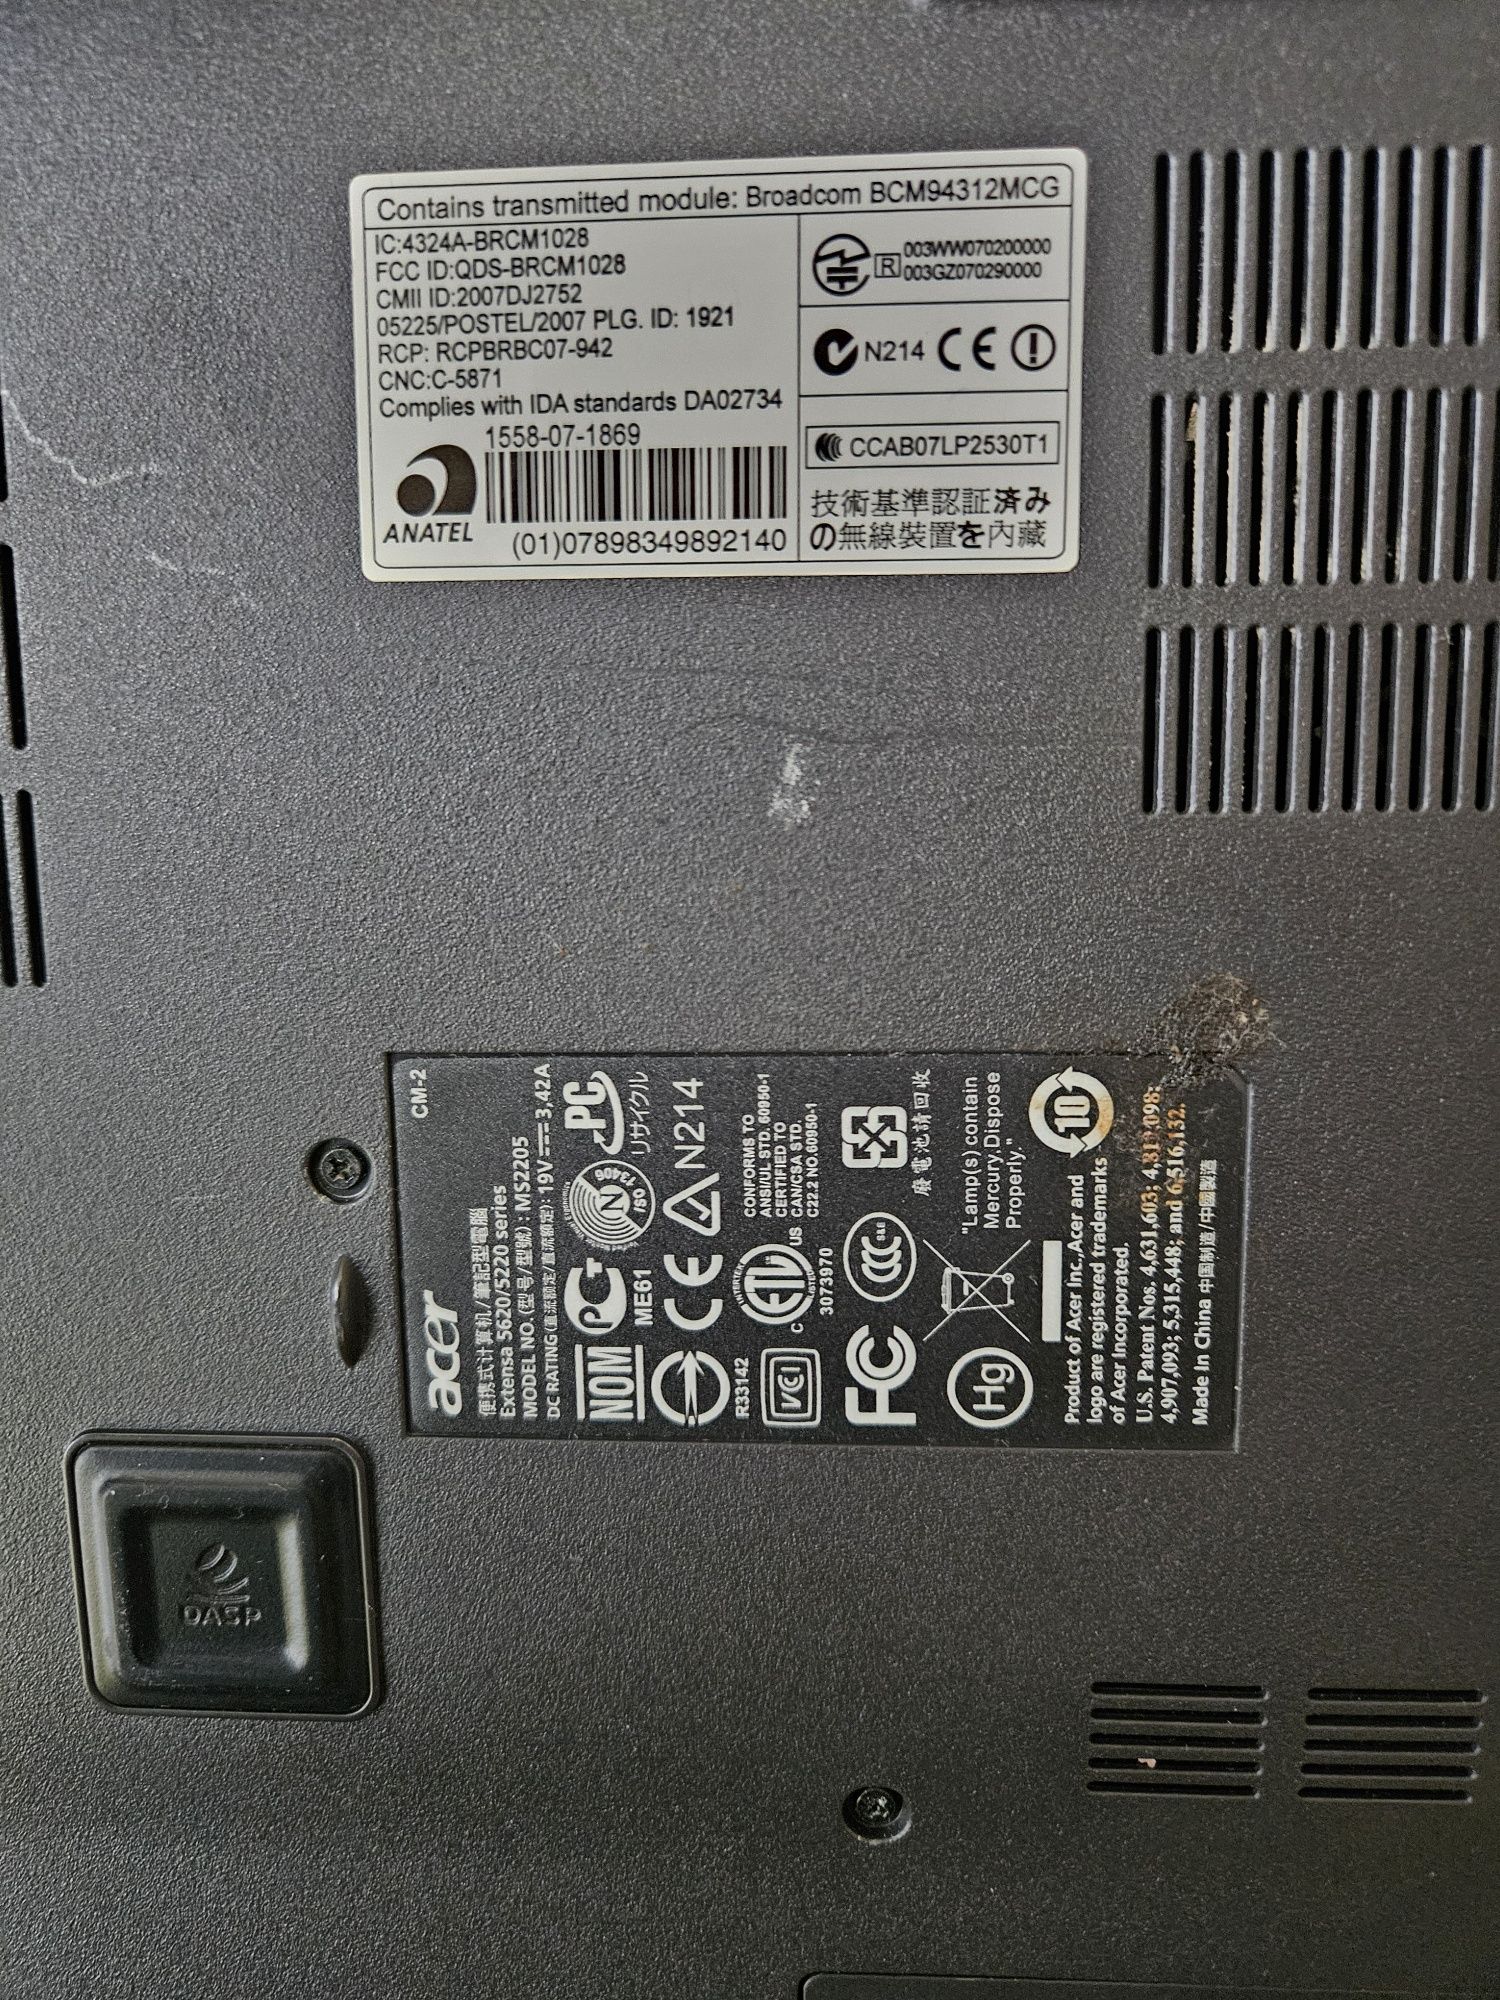 Laptop Acer 5220